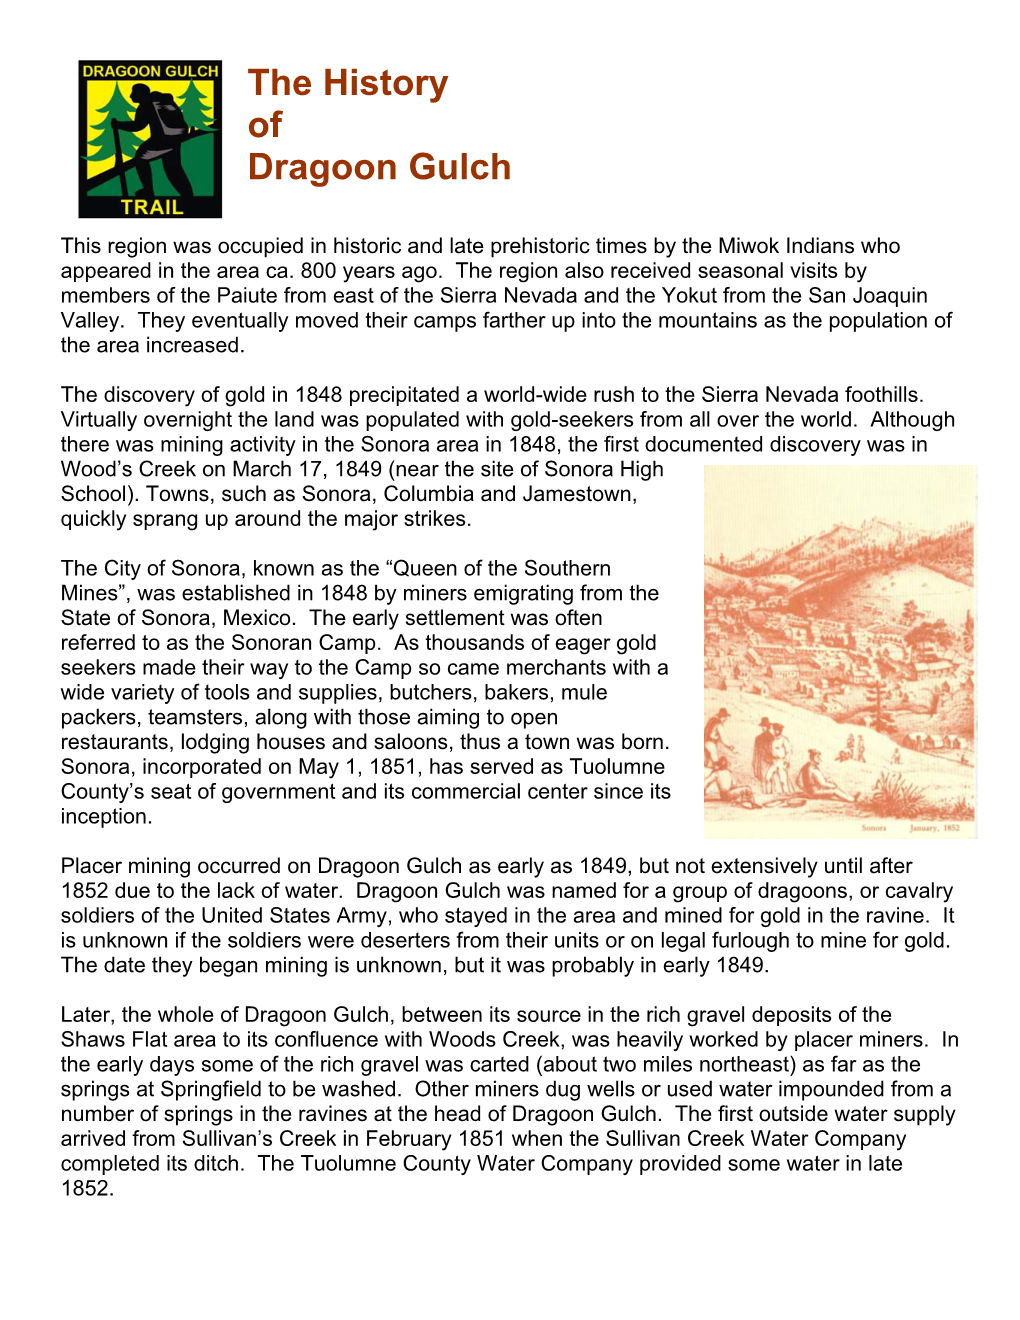 The History of Dragoon Gulch